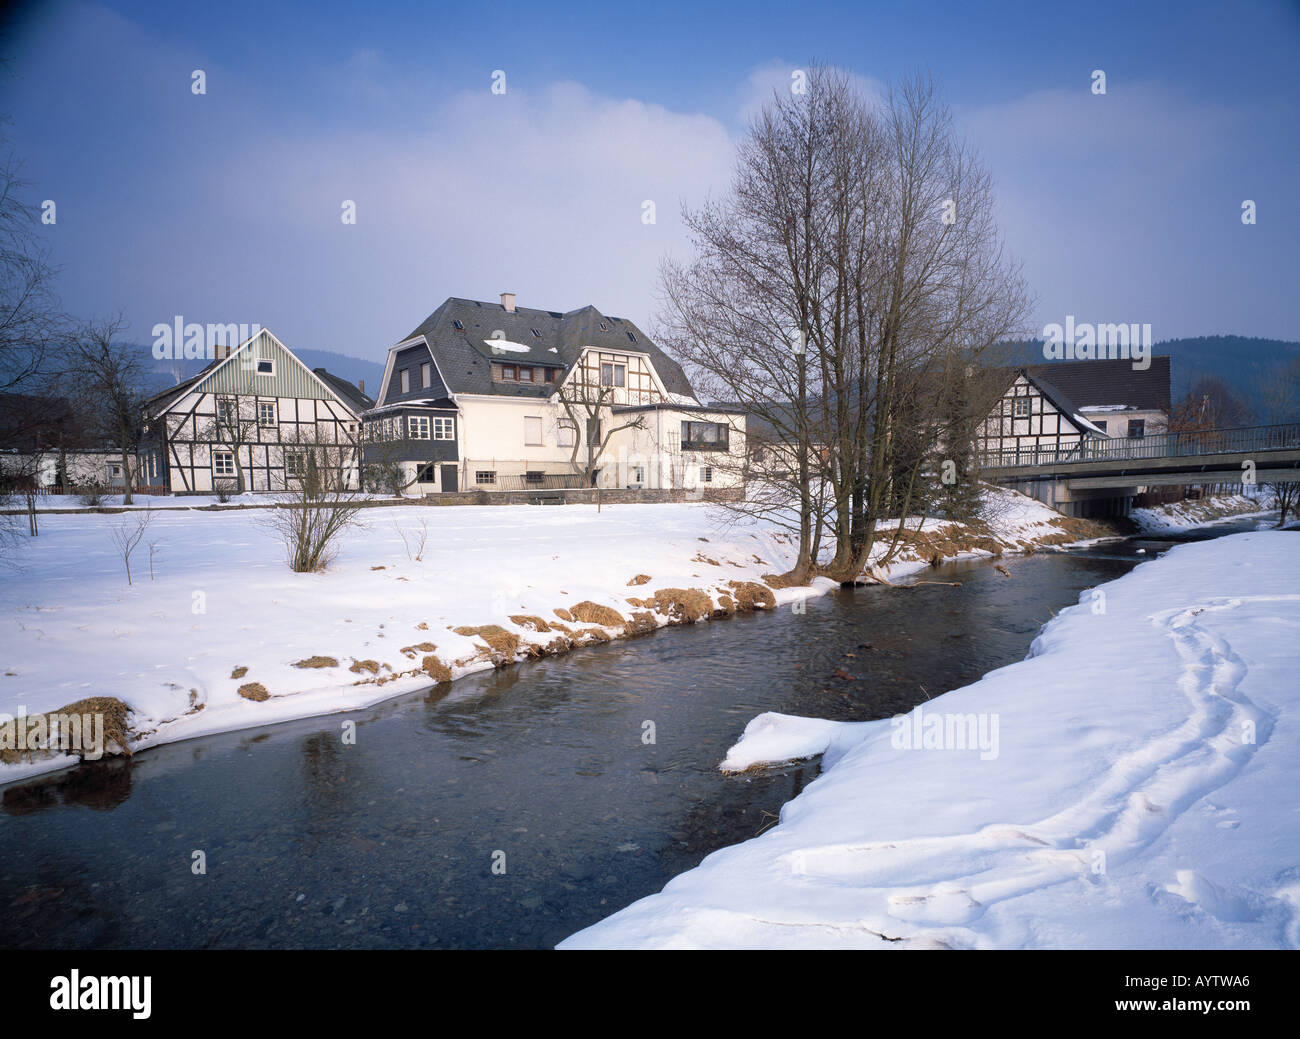 verschneite Flusslandschaft im Winter, Vennelandschaft,Eslohe, Naturpark Homert, Sauerland, Nordrhein-Westfalen Stock Photo